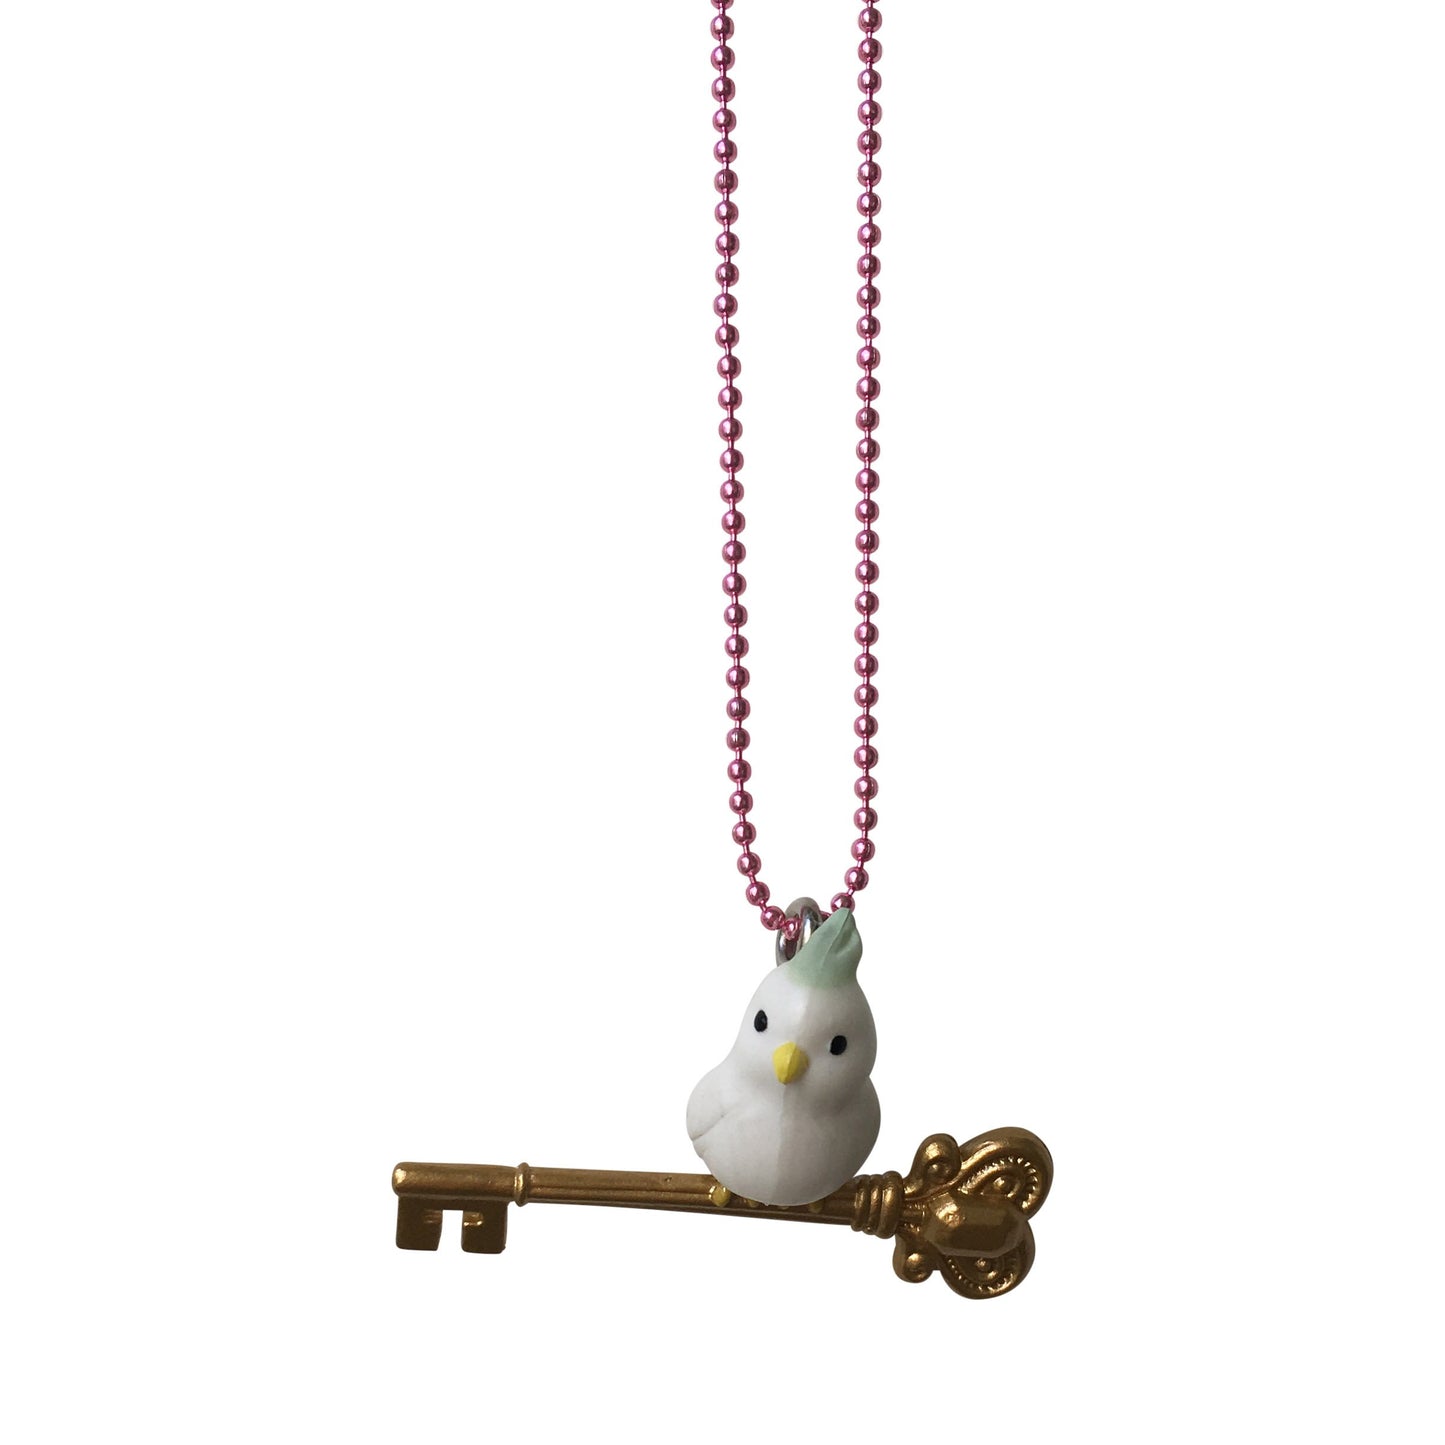 SALE! Ltd. Pop Cutie Key Keeper Necklaces